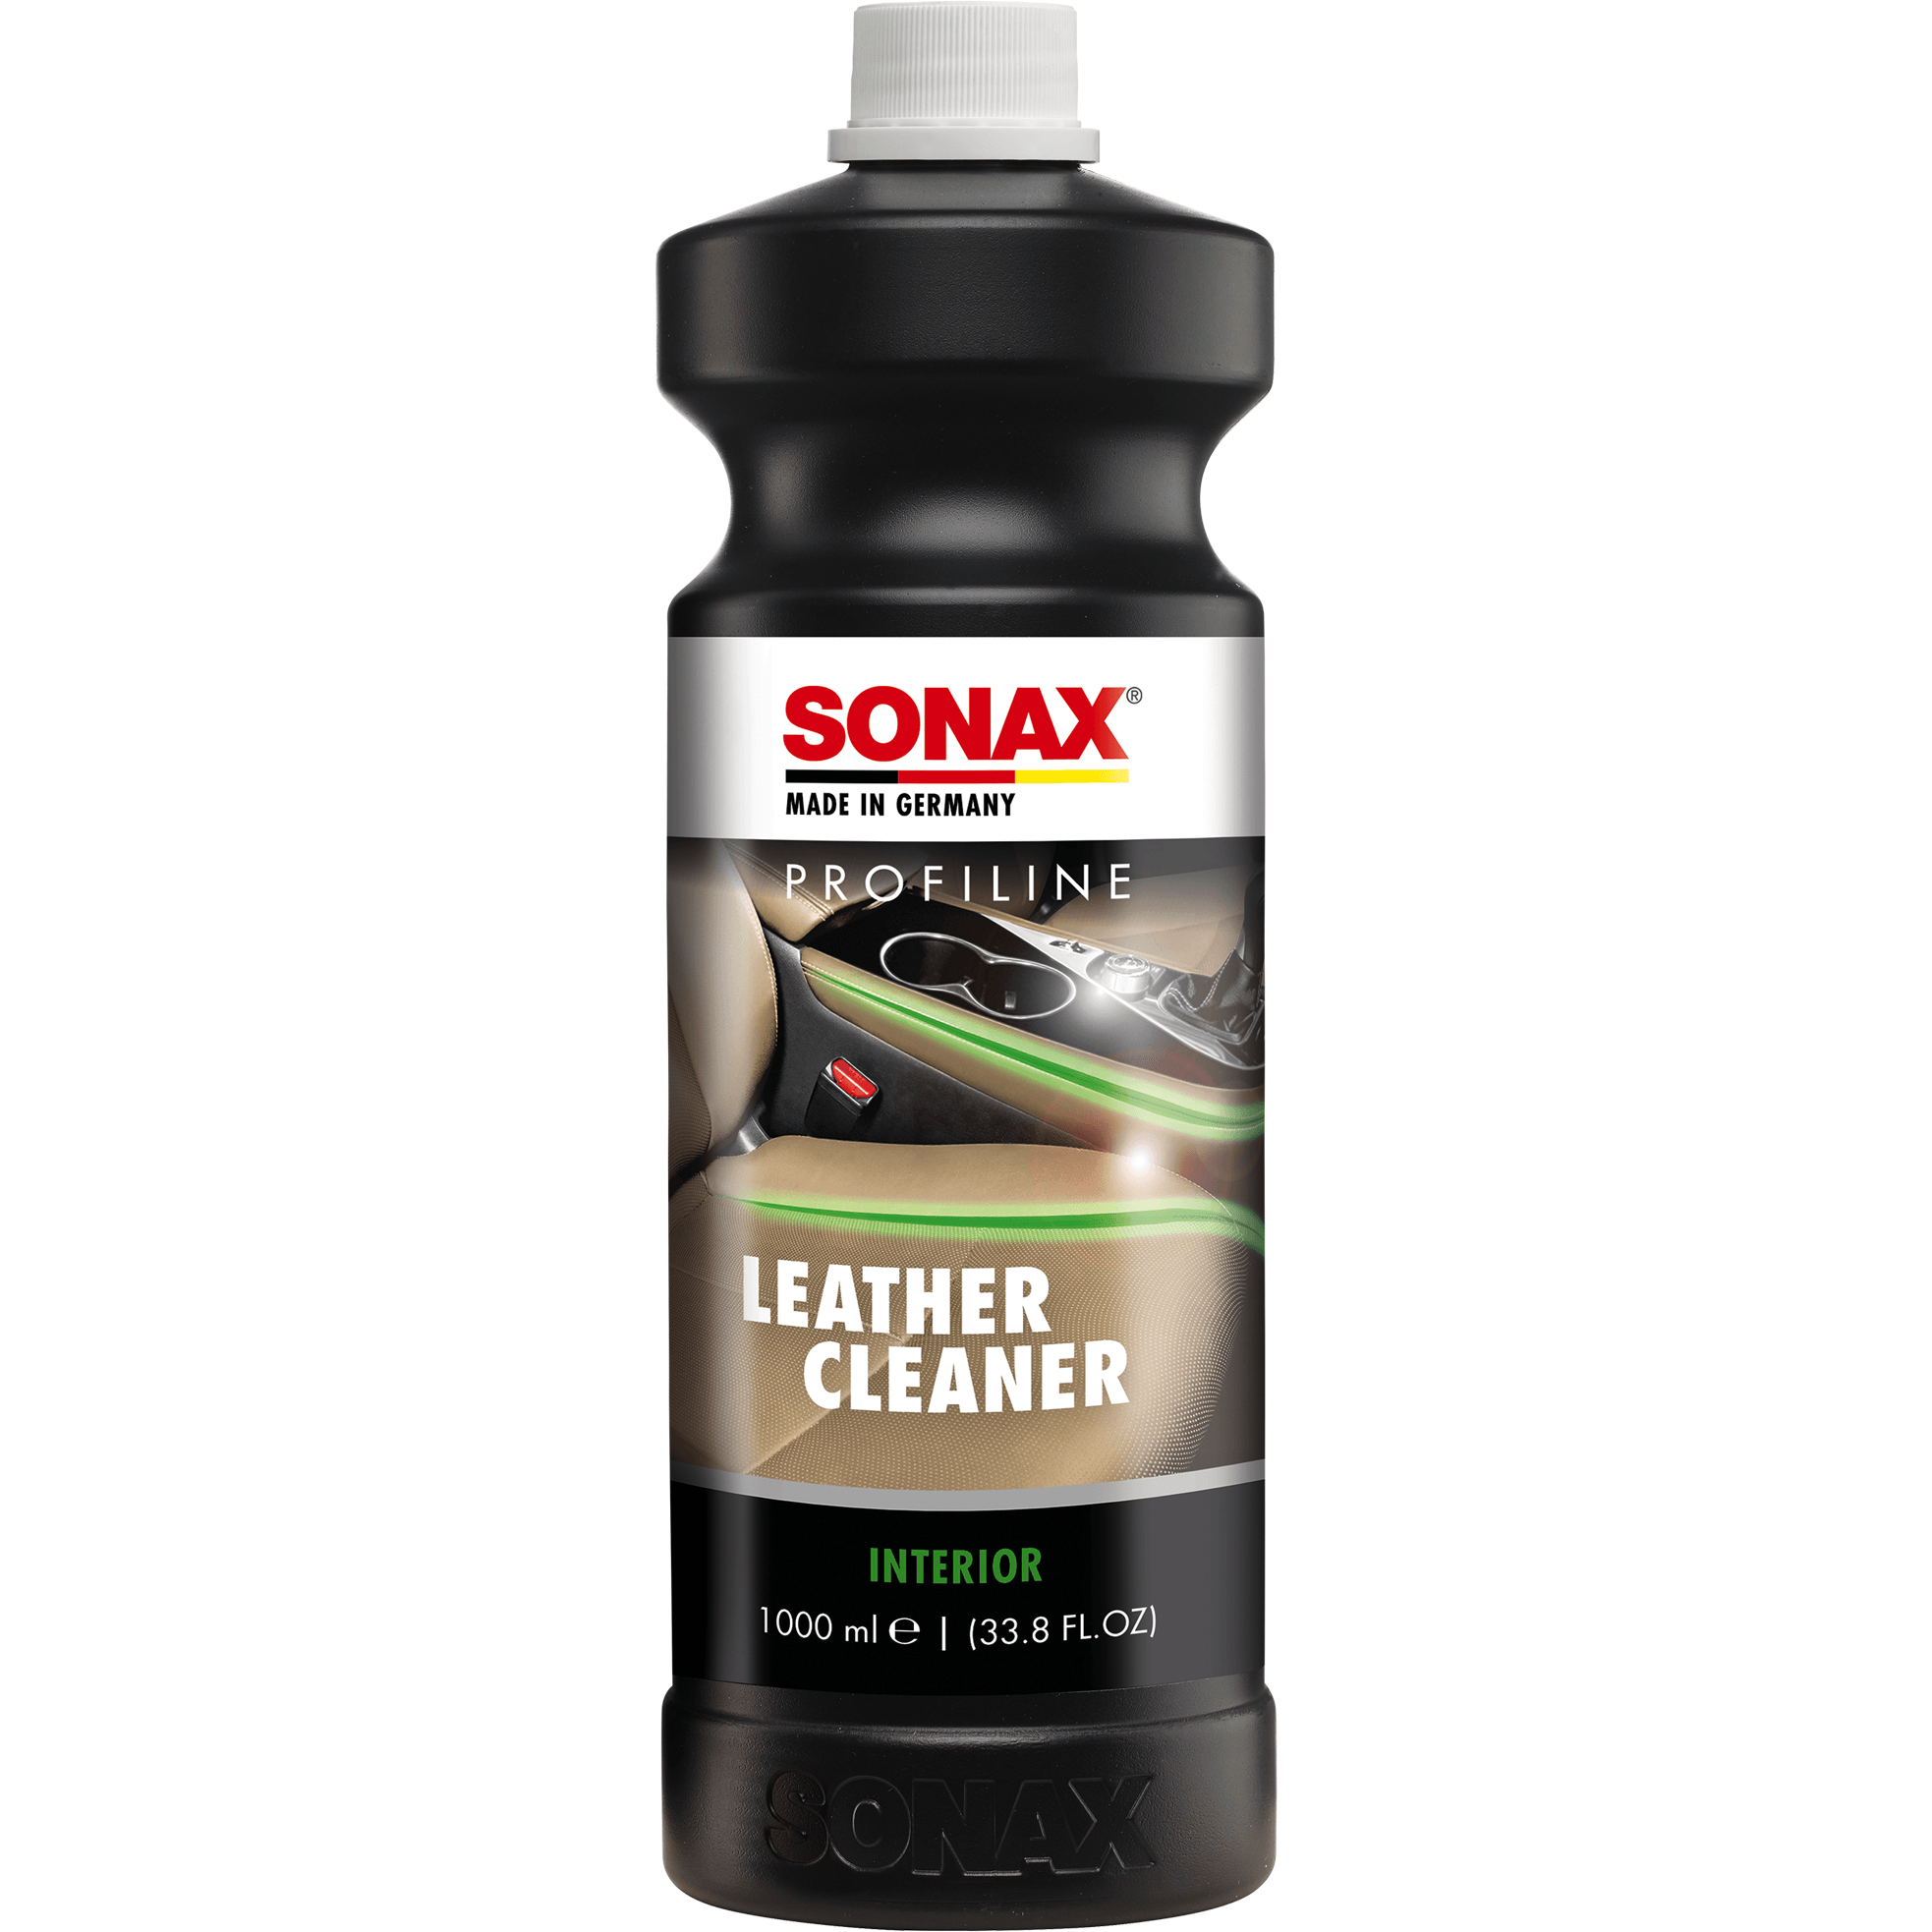 Sonax Profiline Leather Cleaner Foam 1L thumbnail